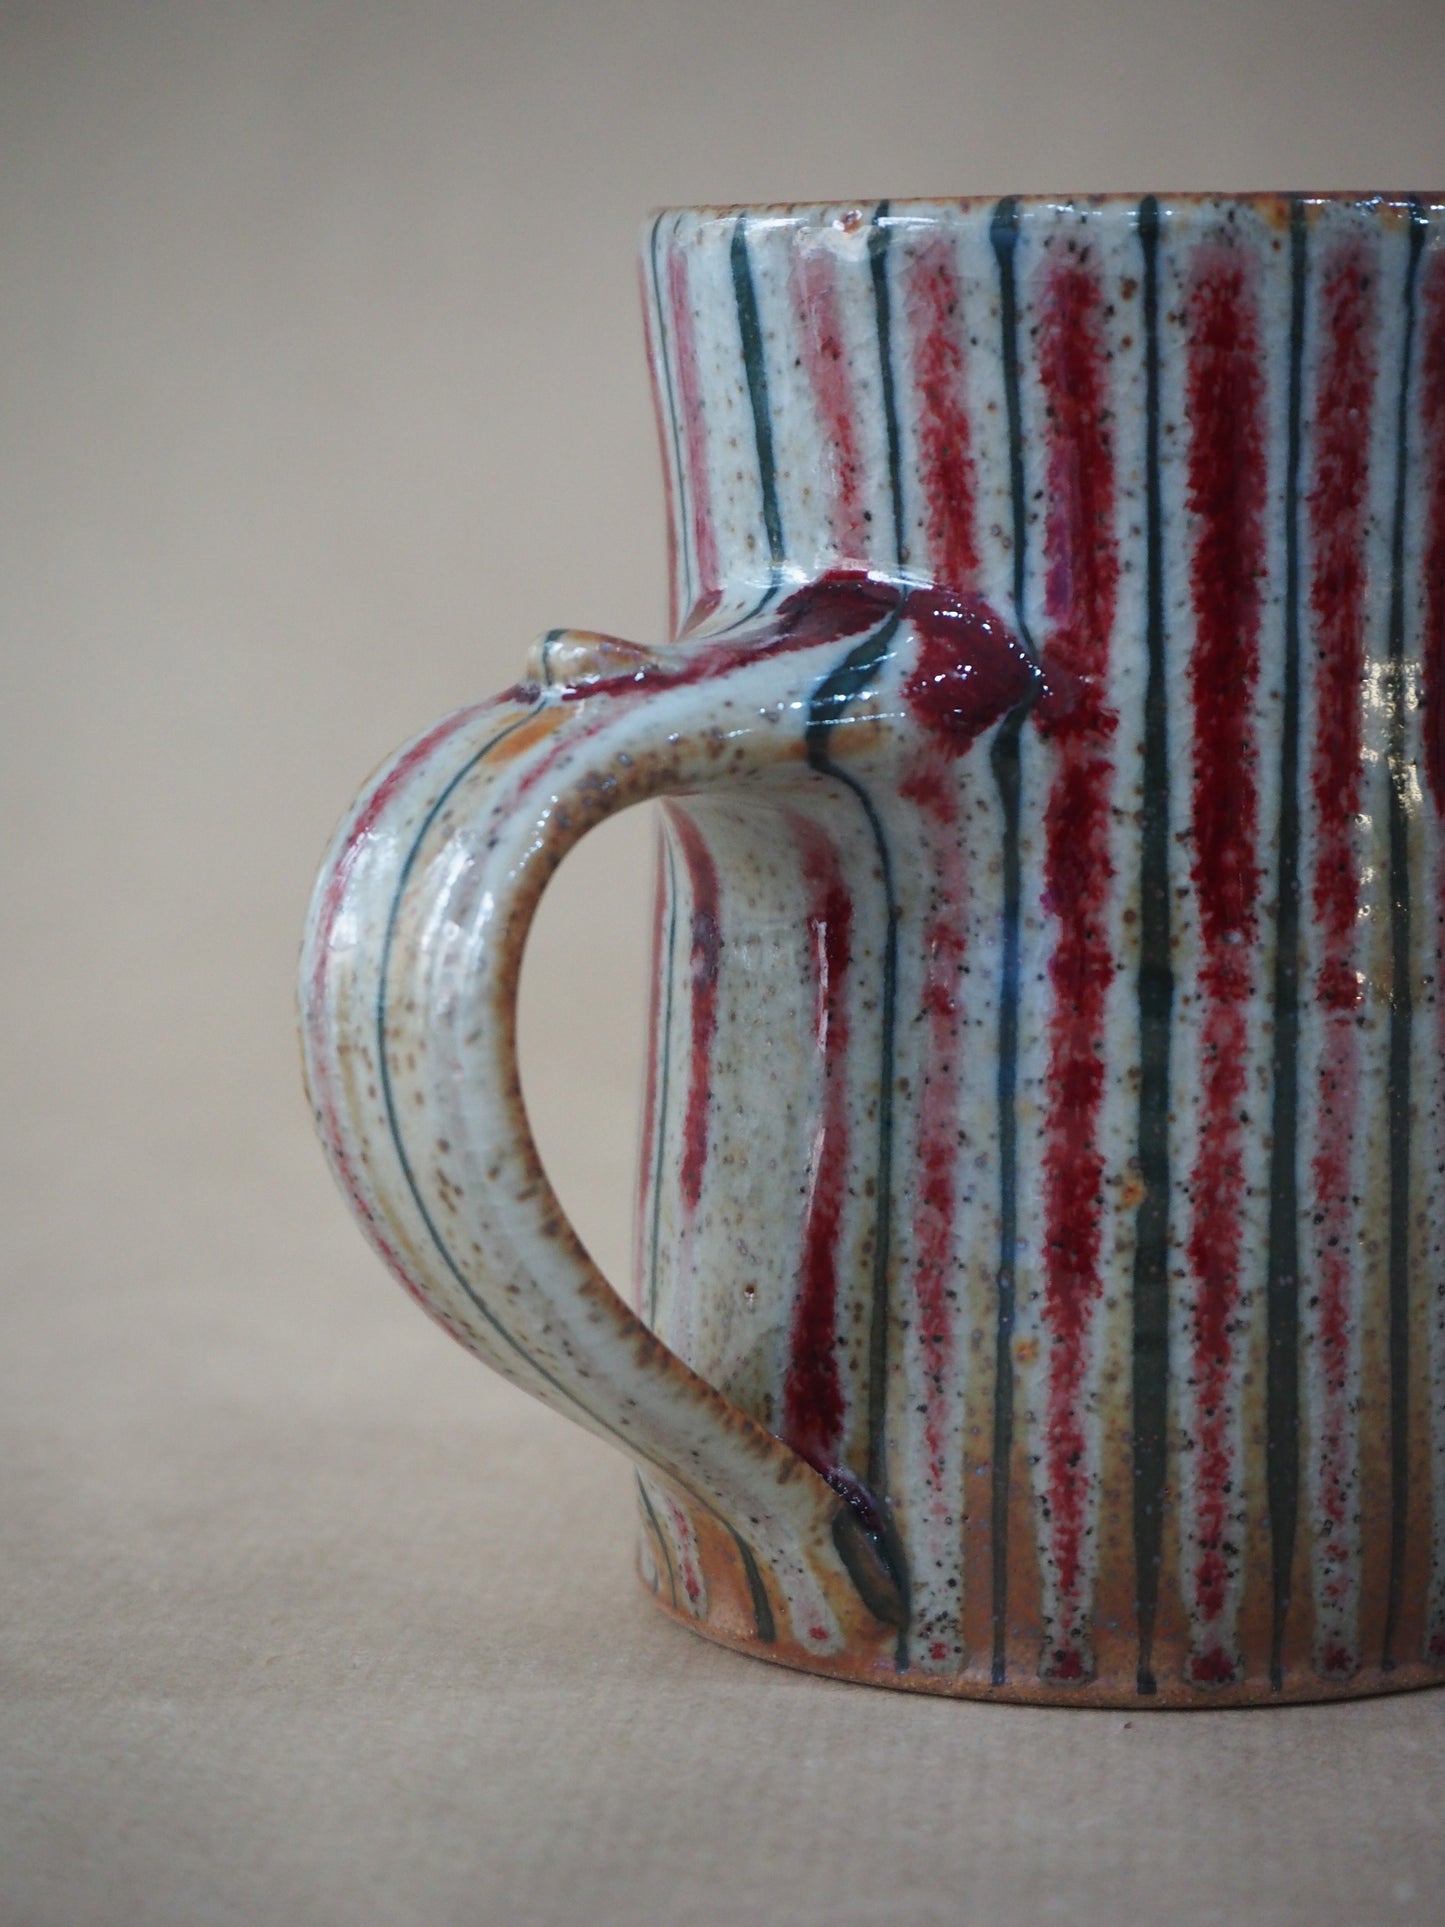 Goldsmith, Robert – Large Red & Blue Pinstripe Mug